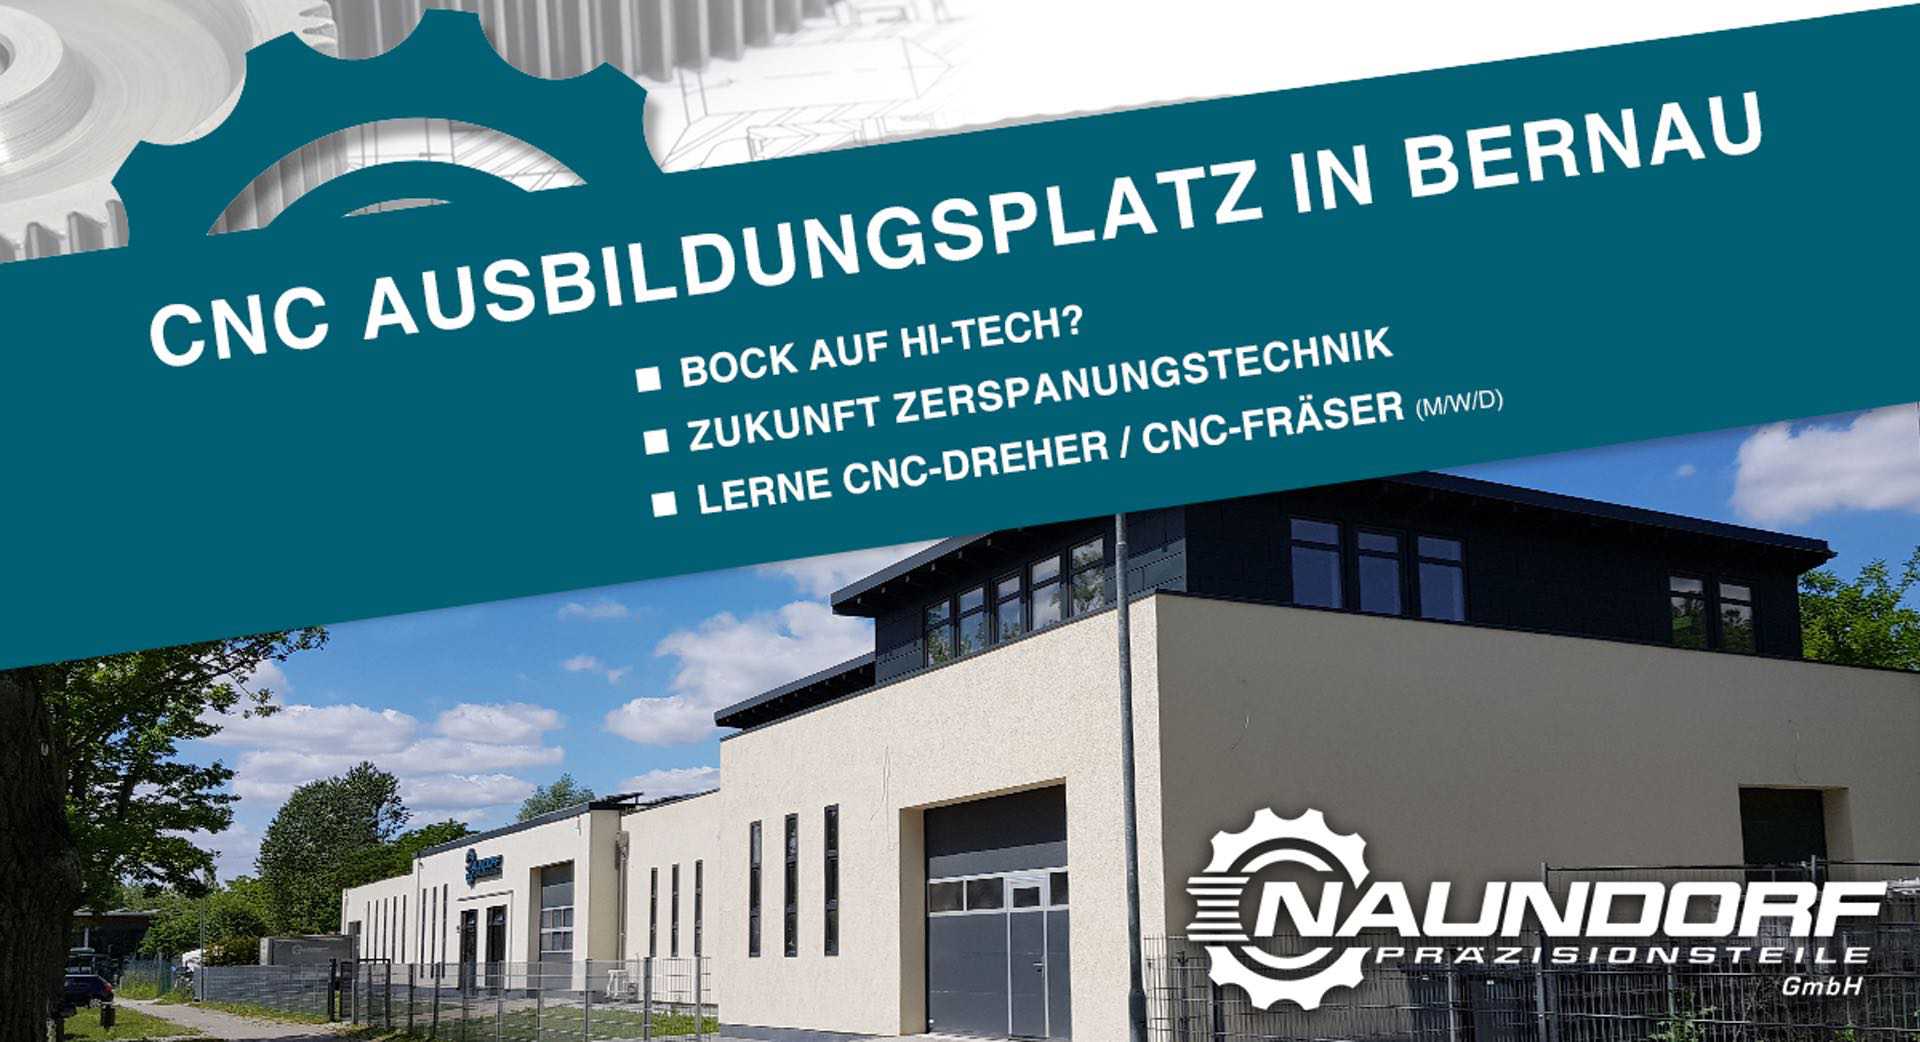 Ausbildungsplatz in Bernau - Zerspanungsmechaniker m/w/d